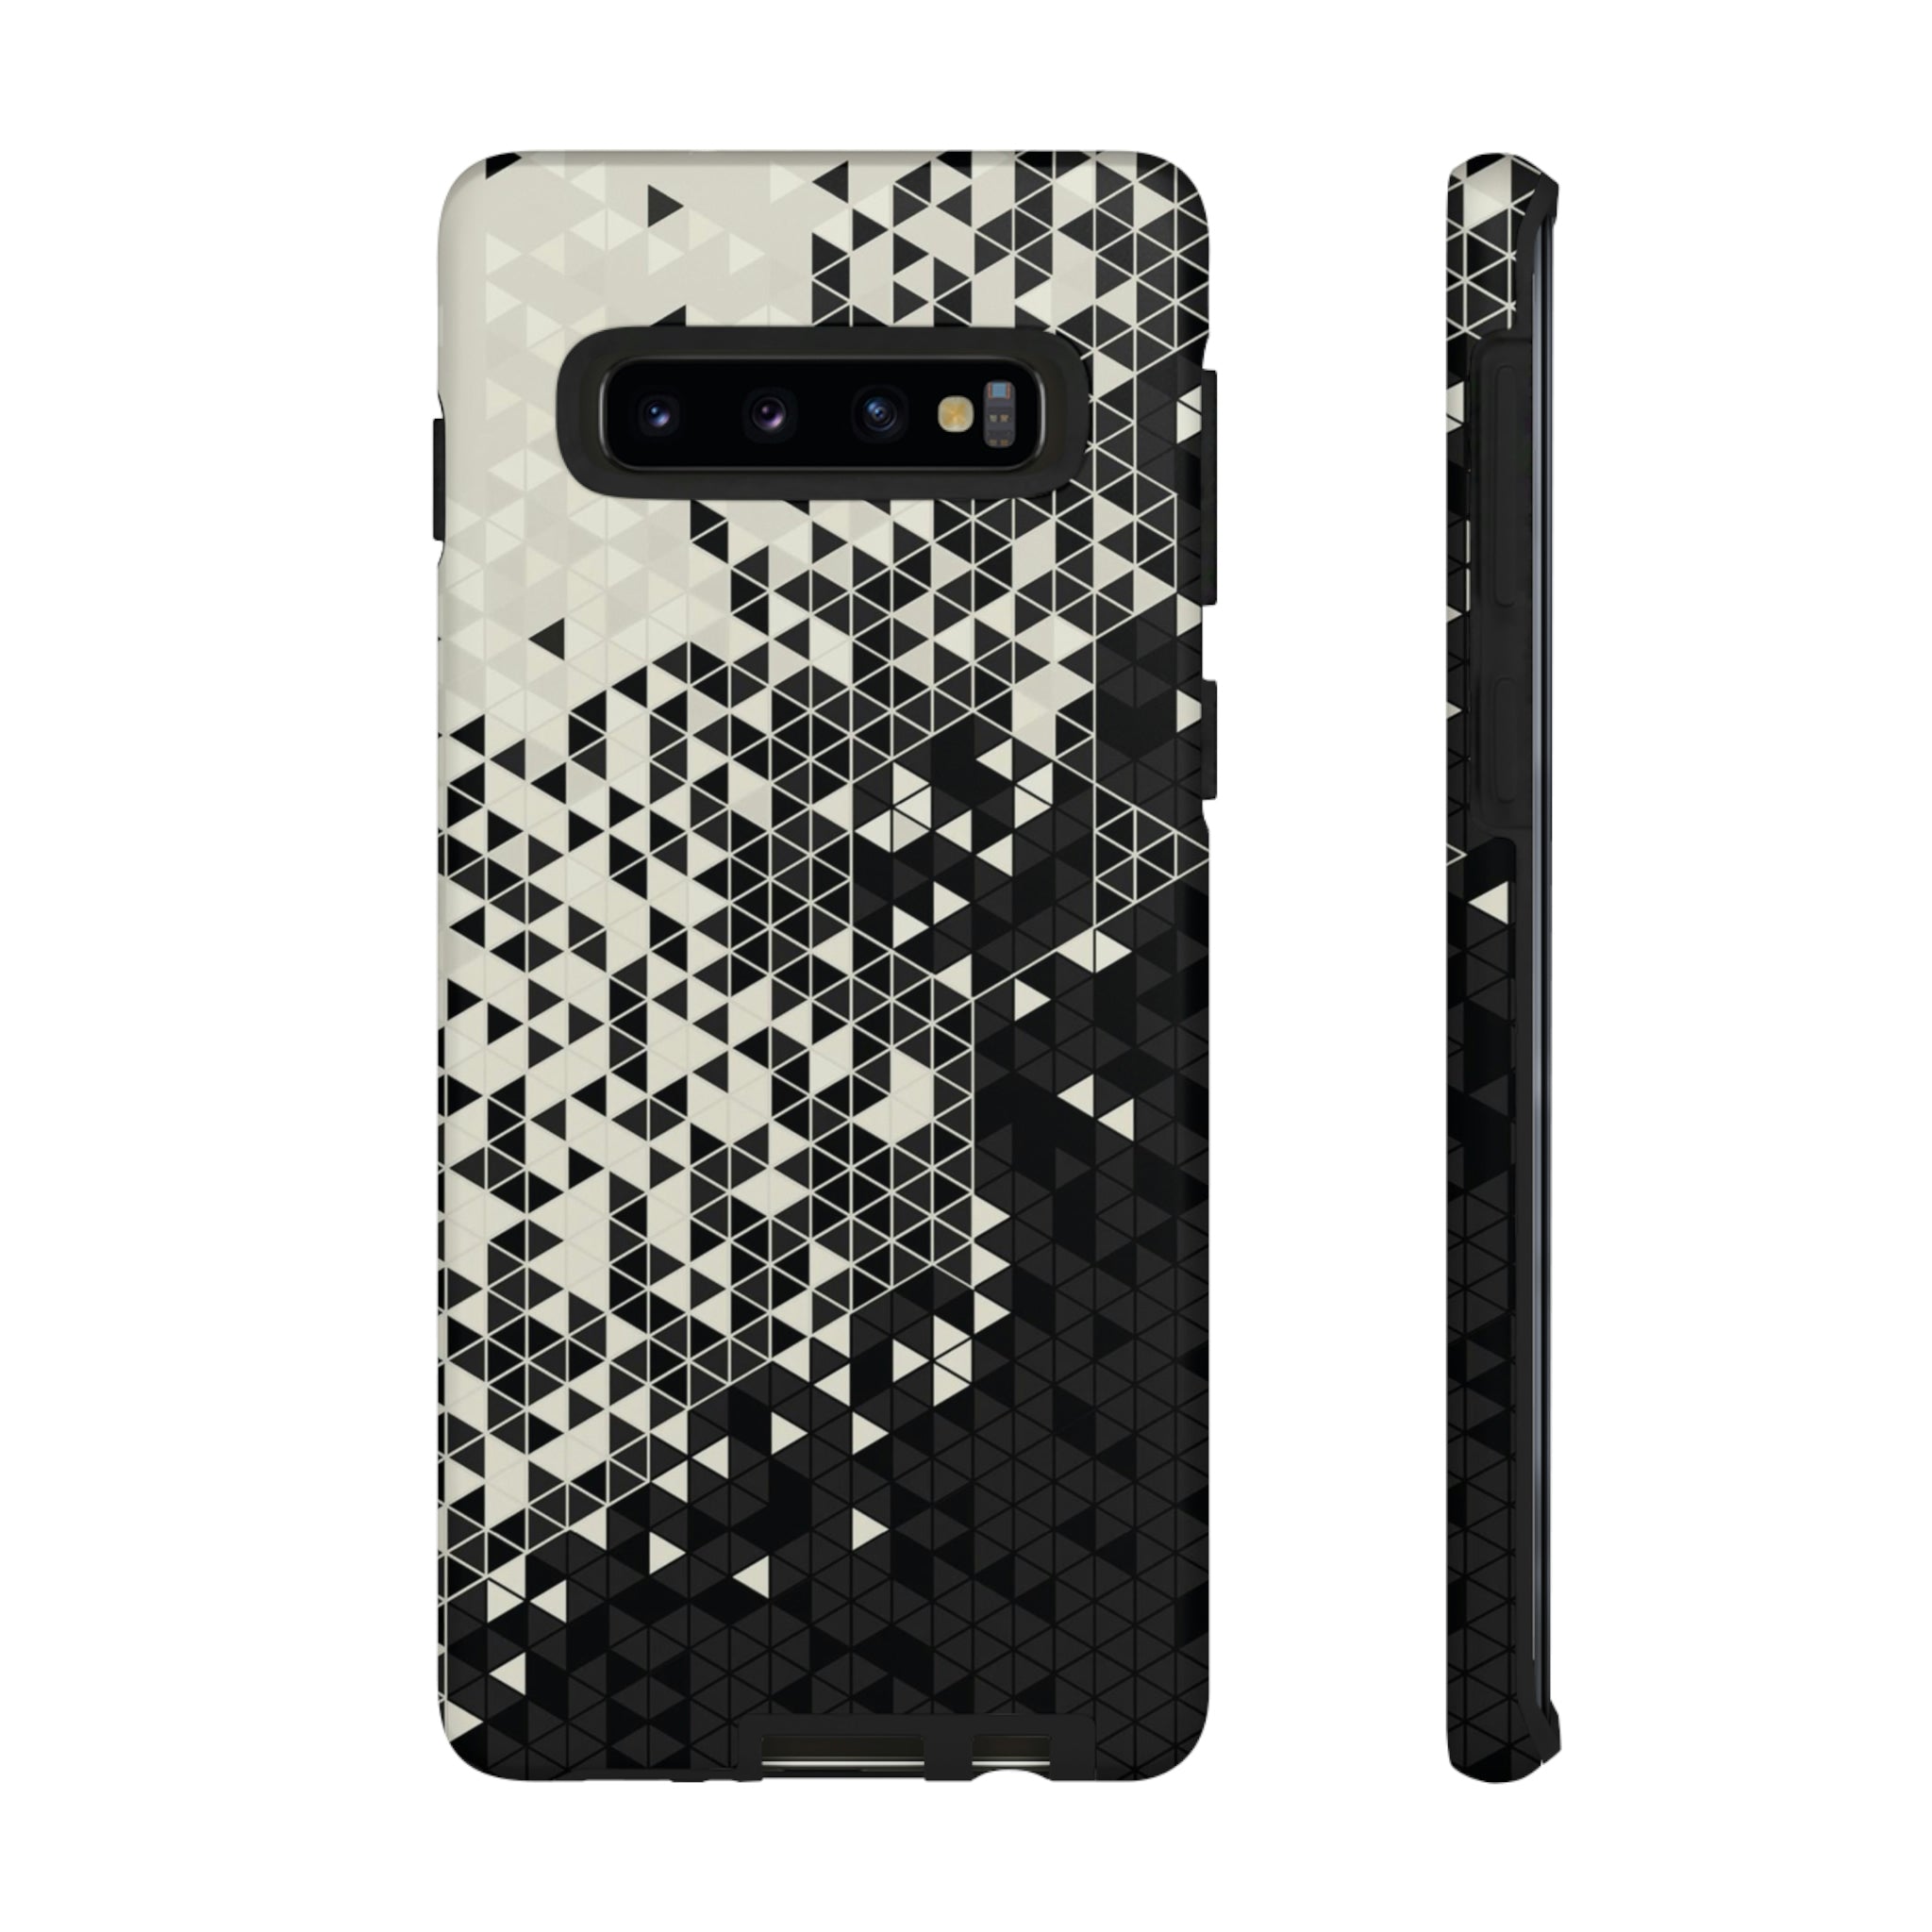 Duality - Dual Layered, Full Body, Armored Phone Case for iPhone 13/Samsung Galaxy S22/Google Pixel 6Smartphone CasesStreamLiteStreamLite